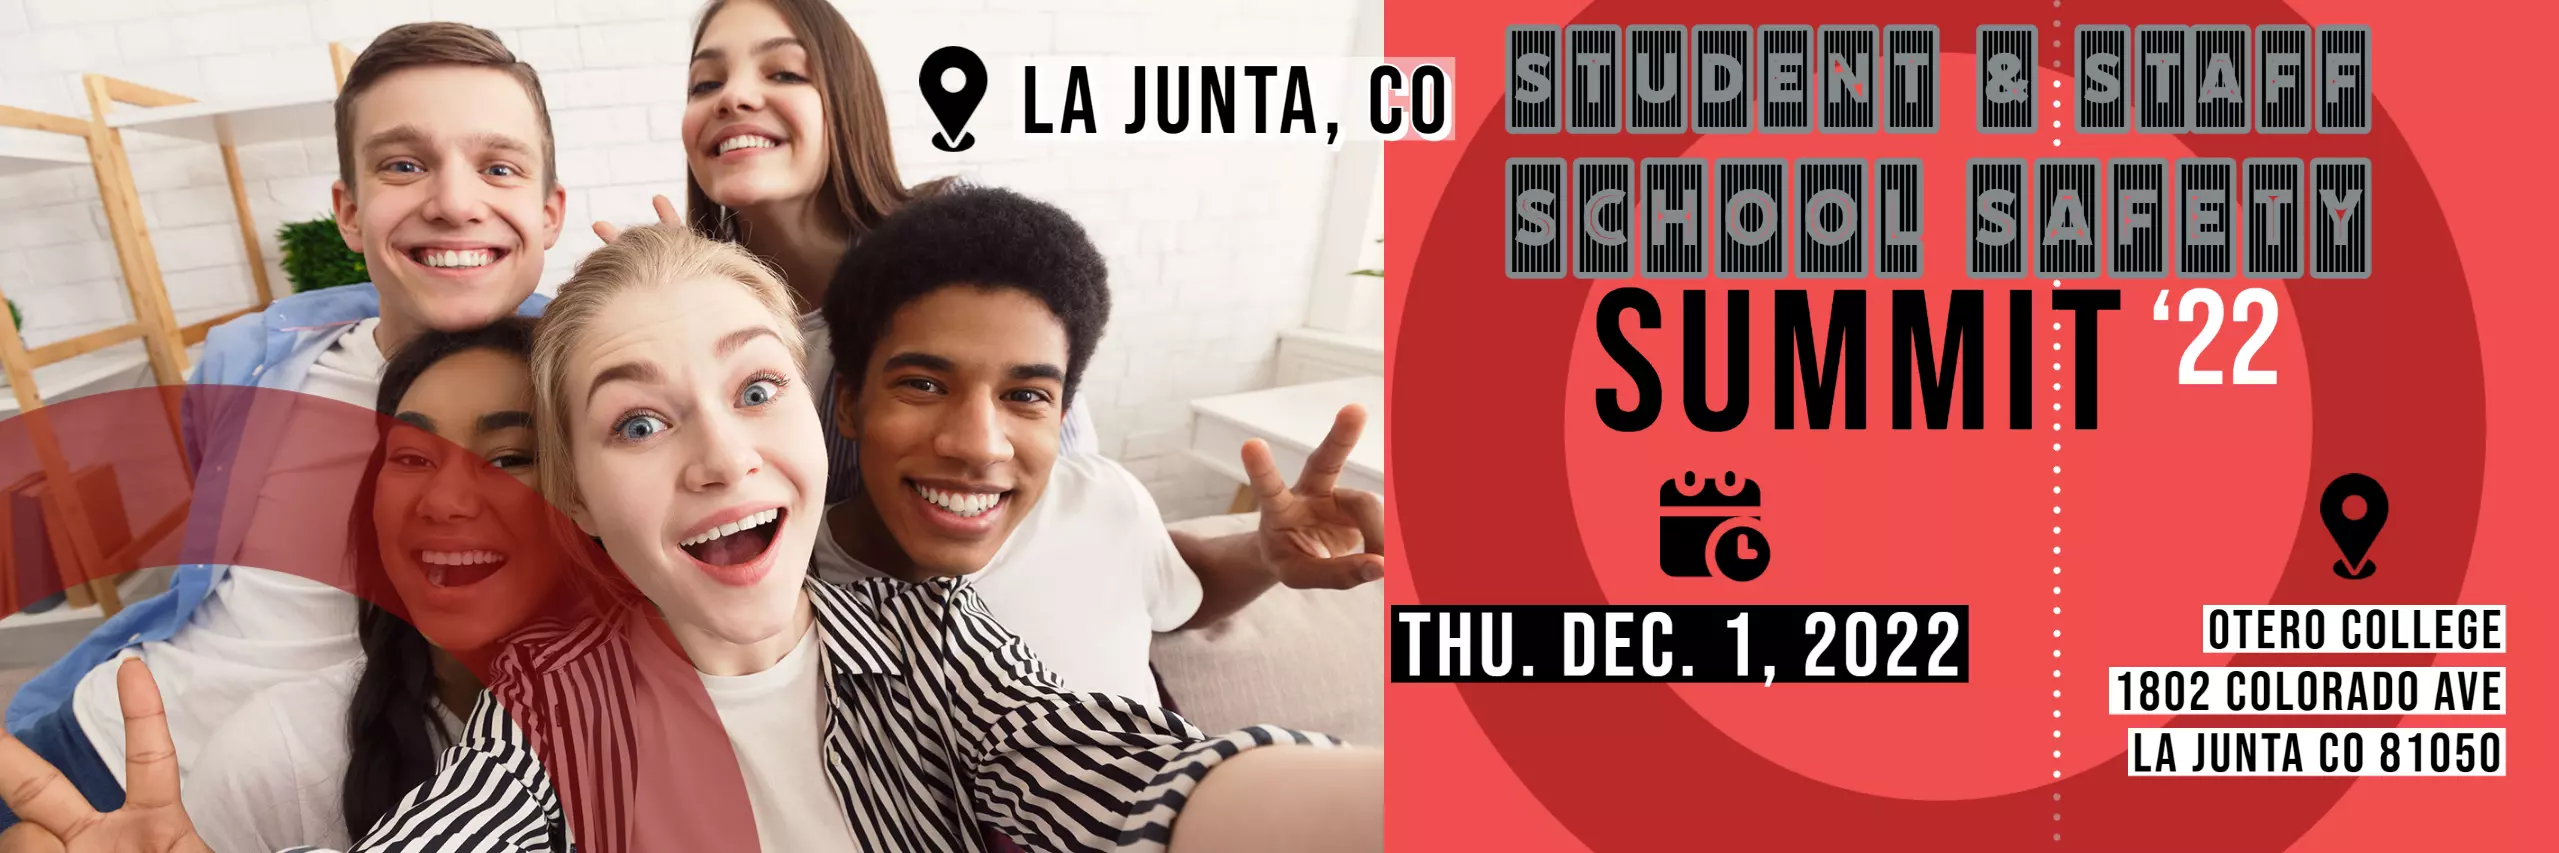 School Safety Summit - La Junta